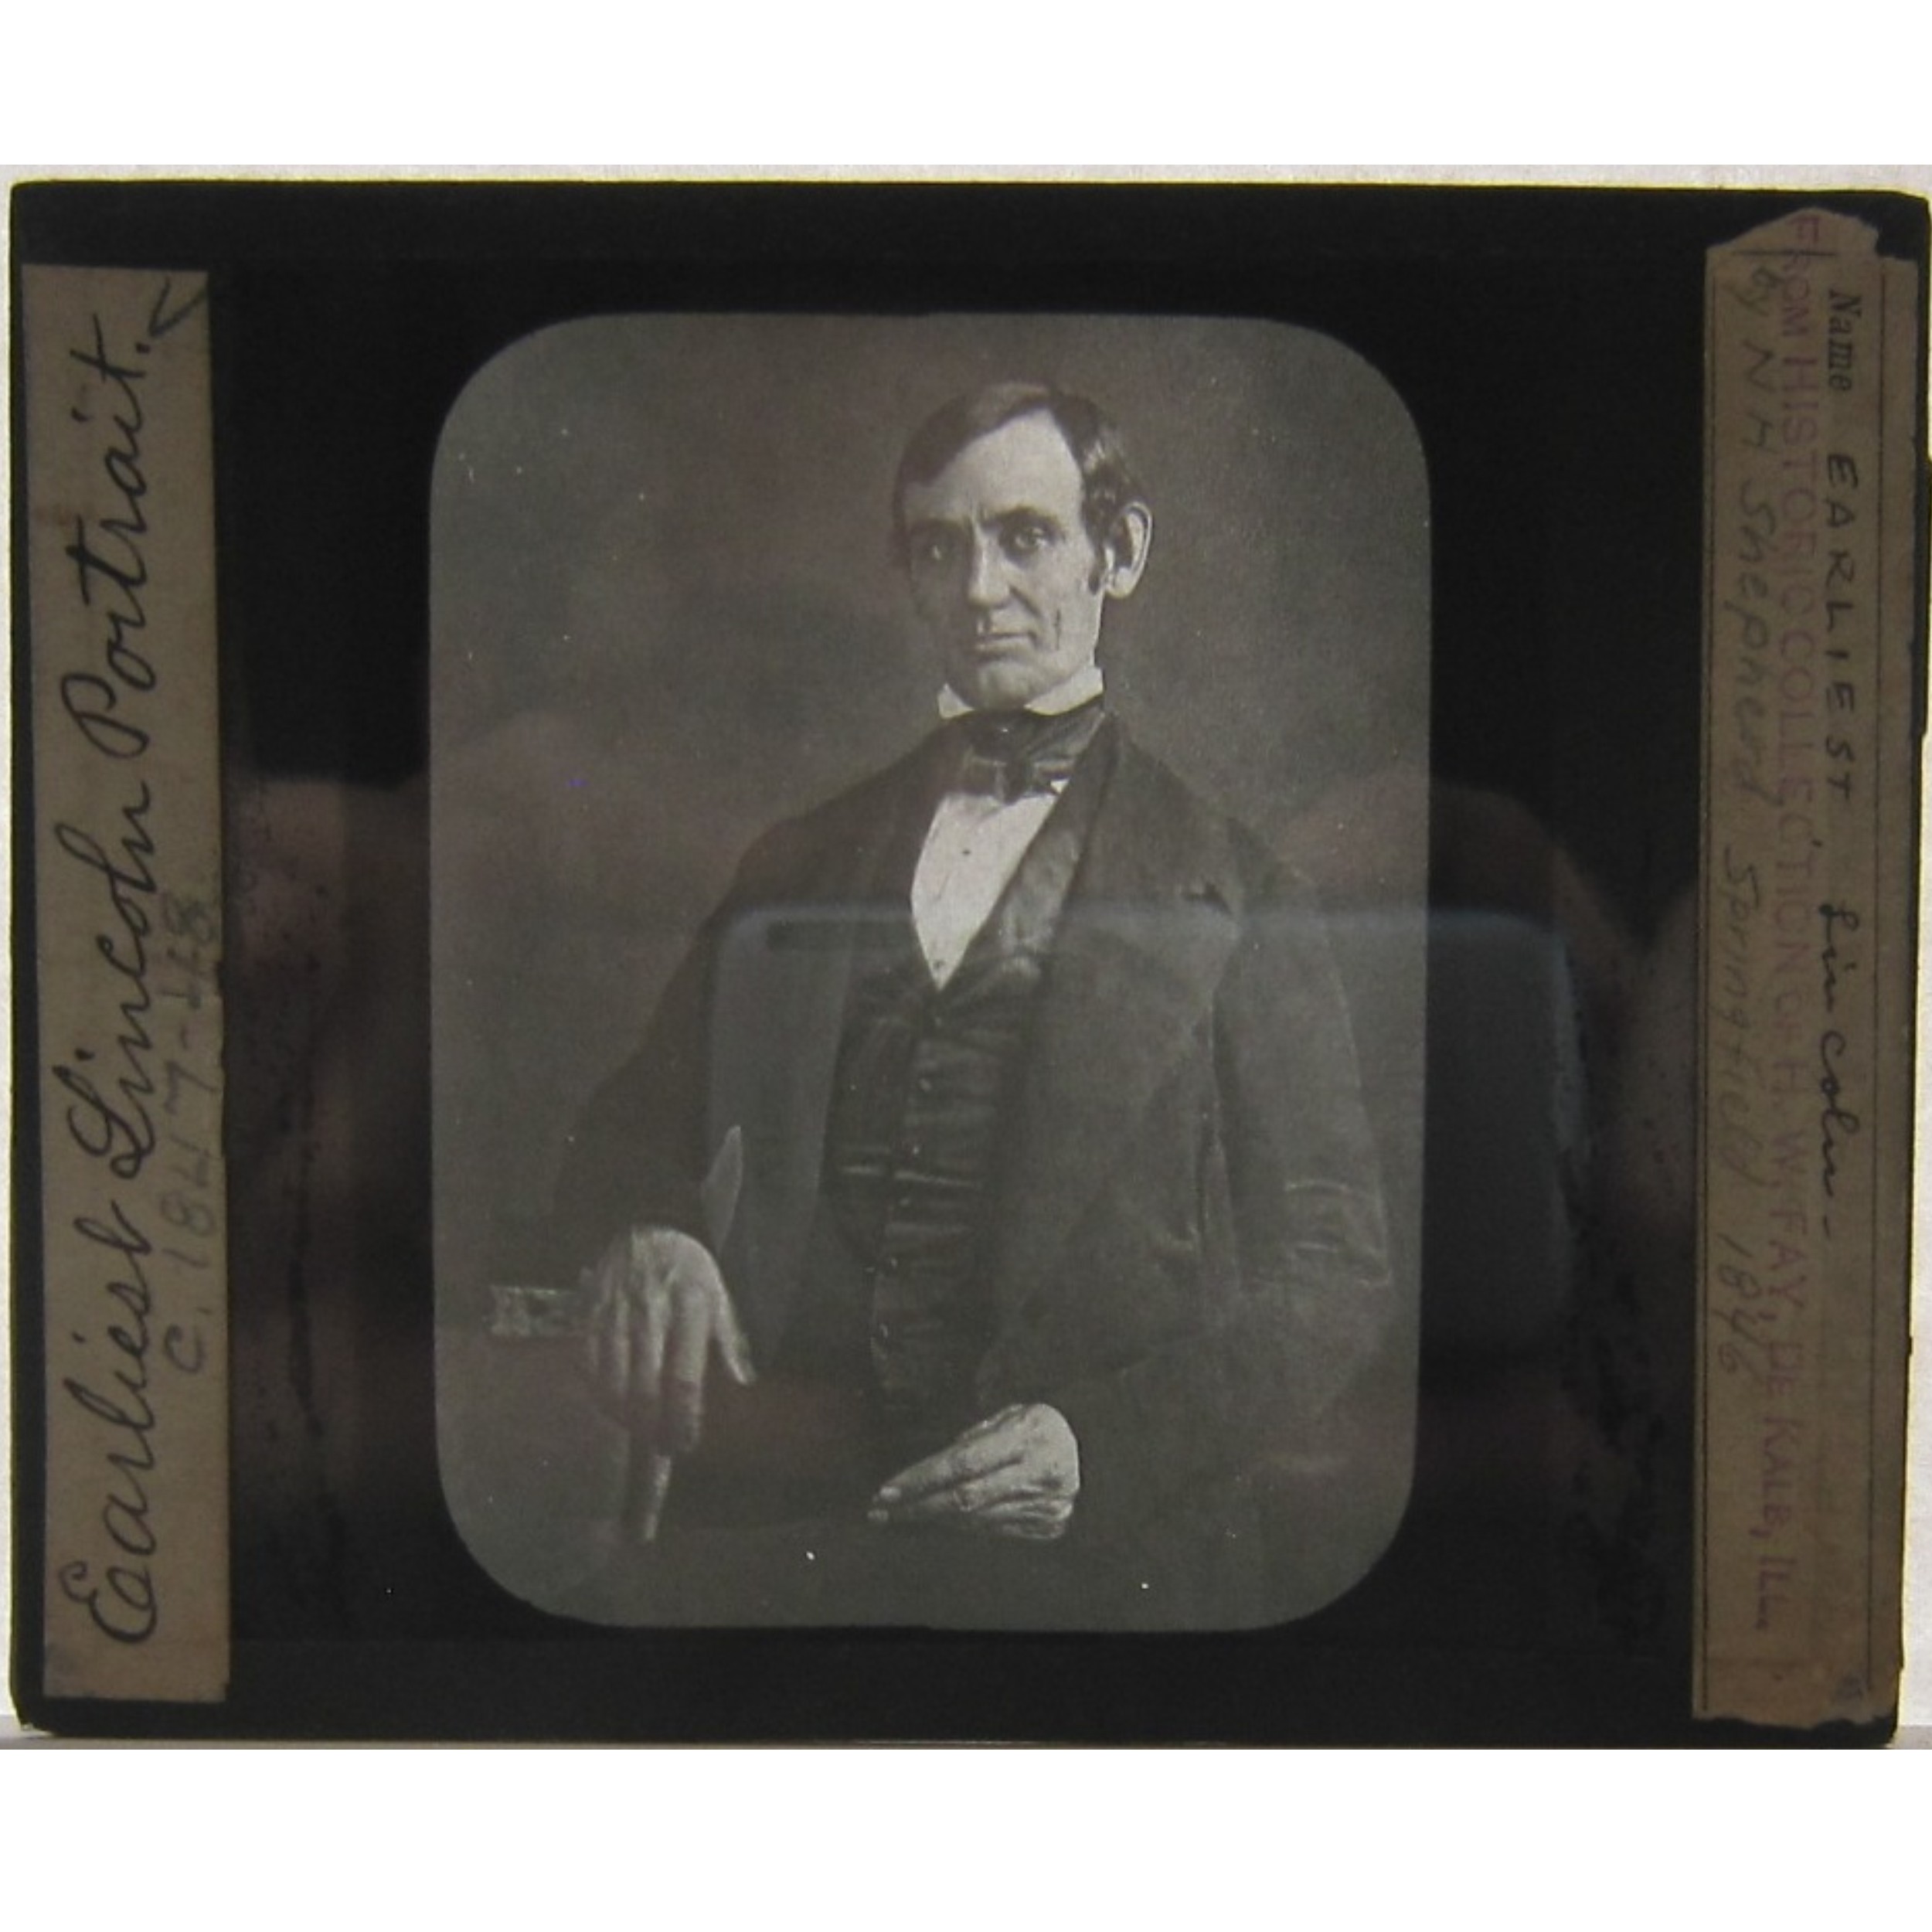 Glass slide of Abraham Lincoln earliest portrait, Washington, circa 1848